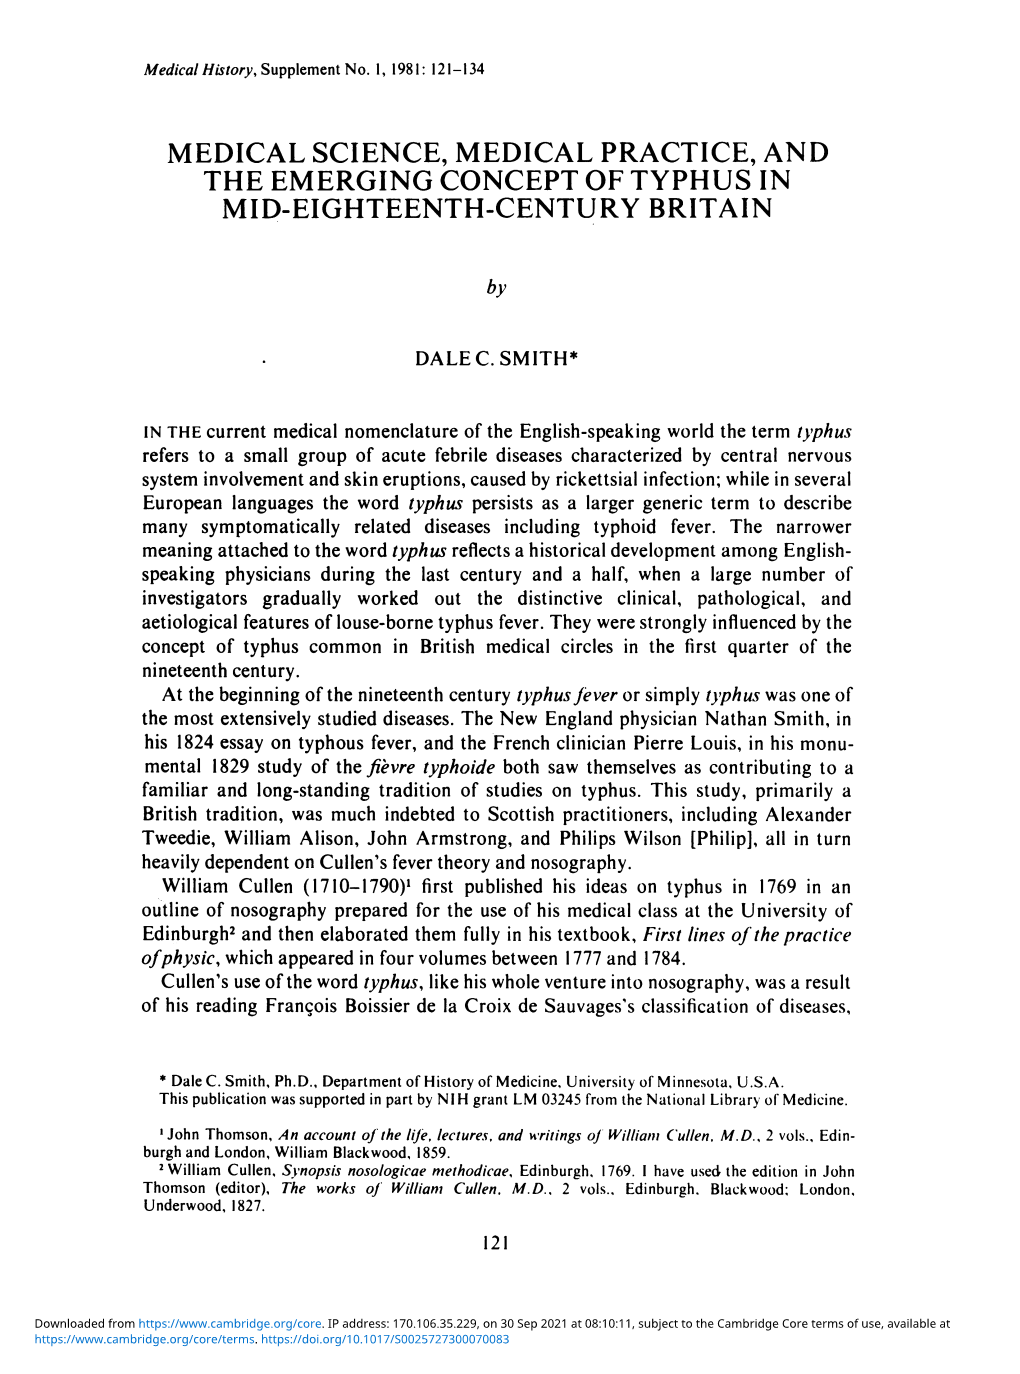 Mid-Eighteenth-Century Britain